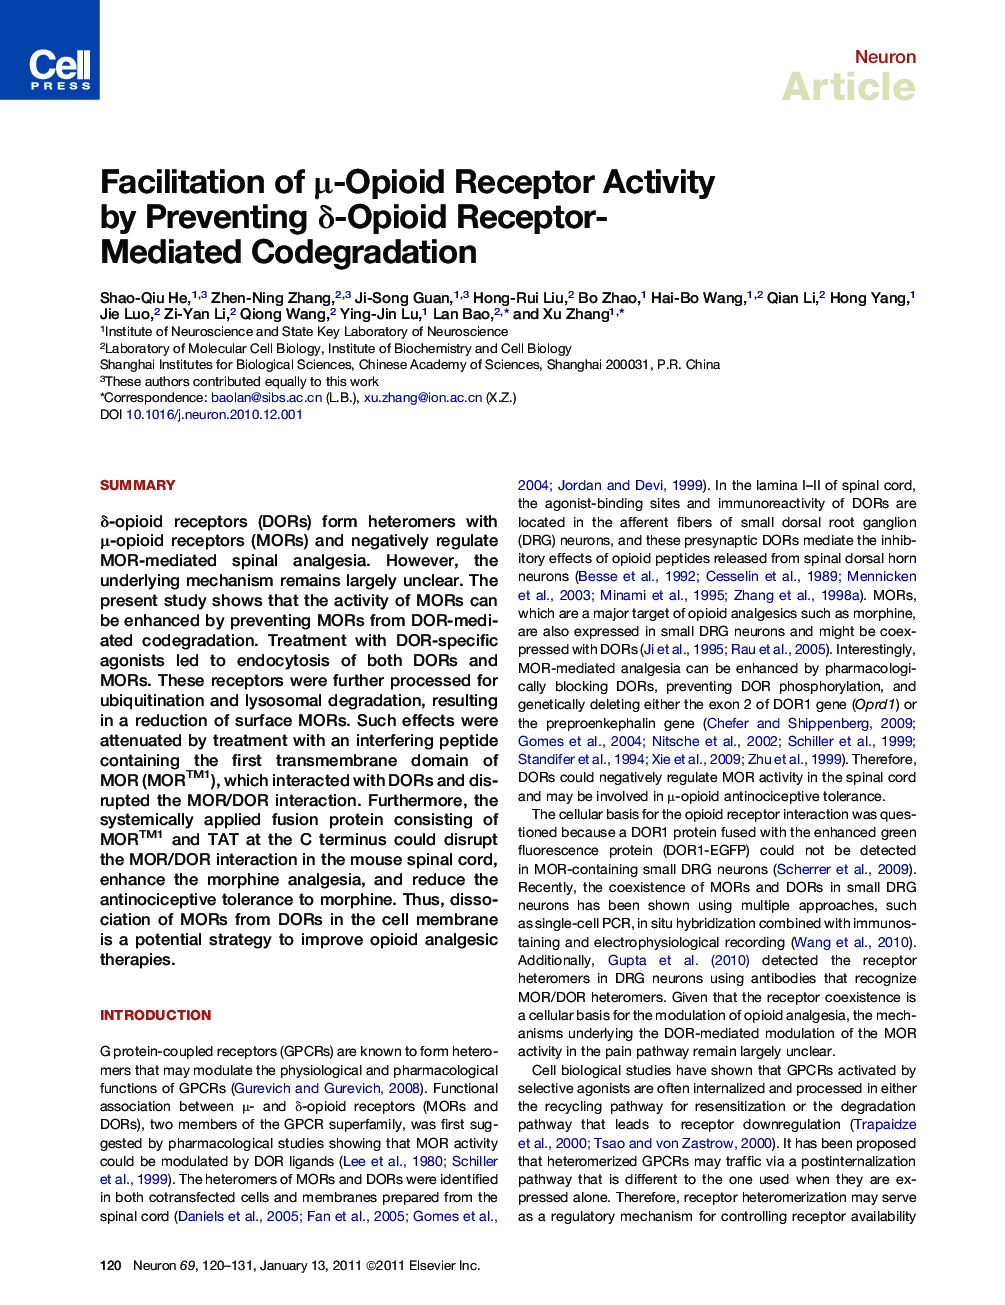 Facilitation of μ-Opioid Receptor Activity by Preventing δ-Opioid Receptor-Mediated Codegradation